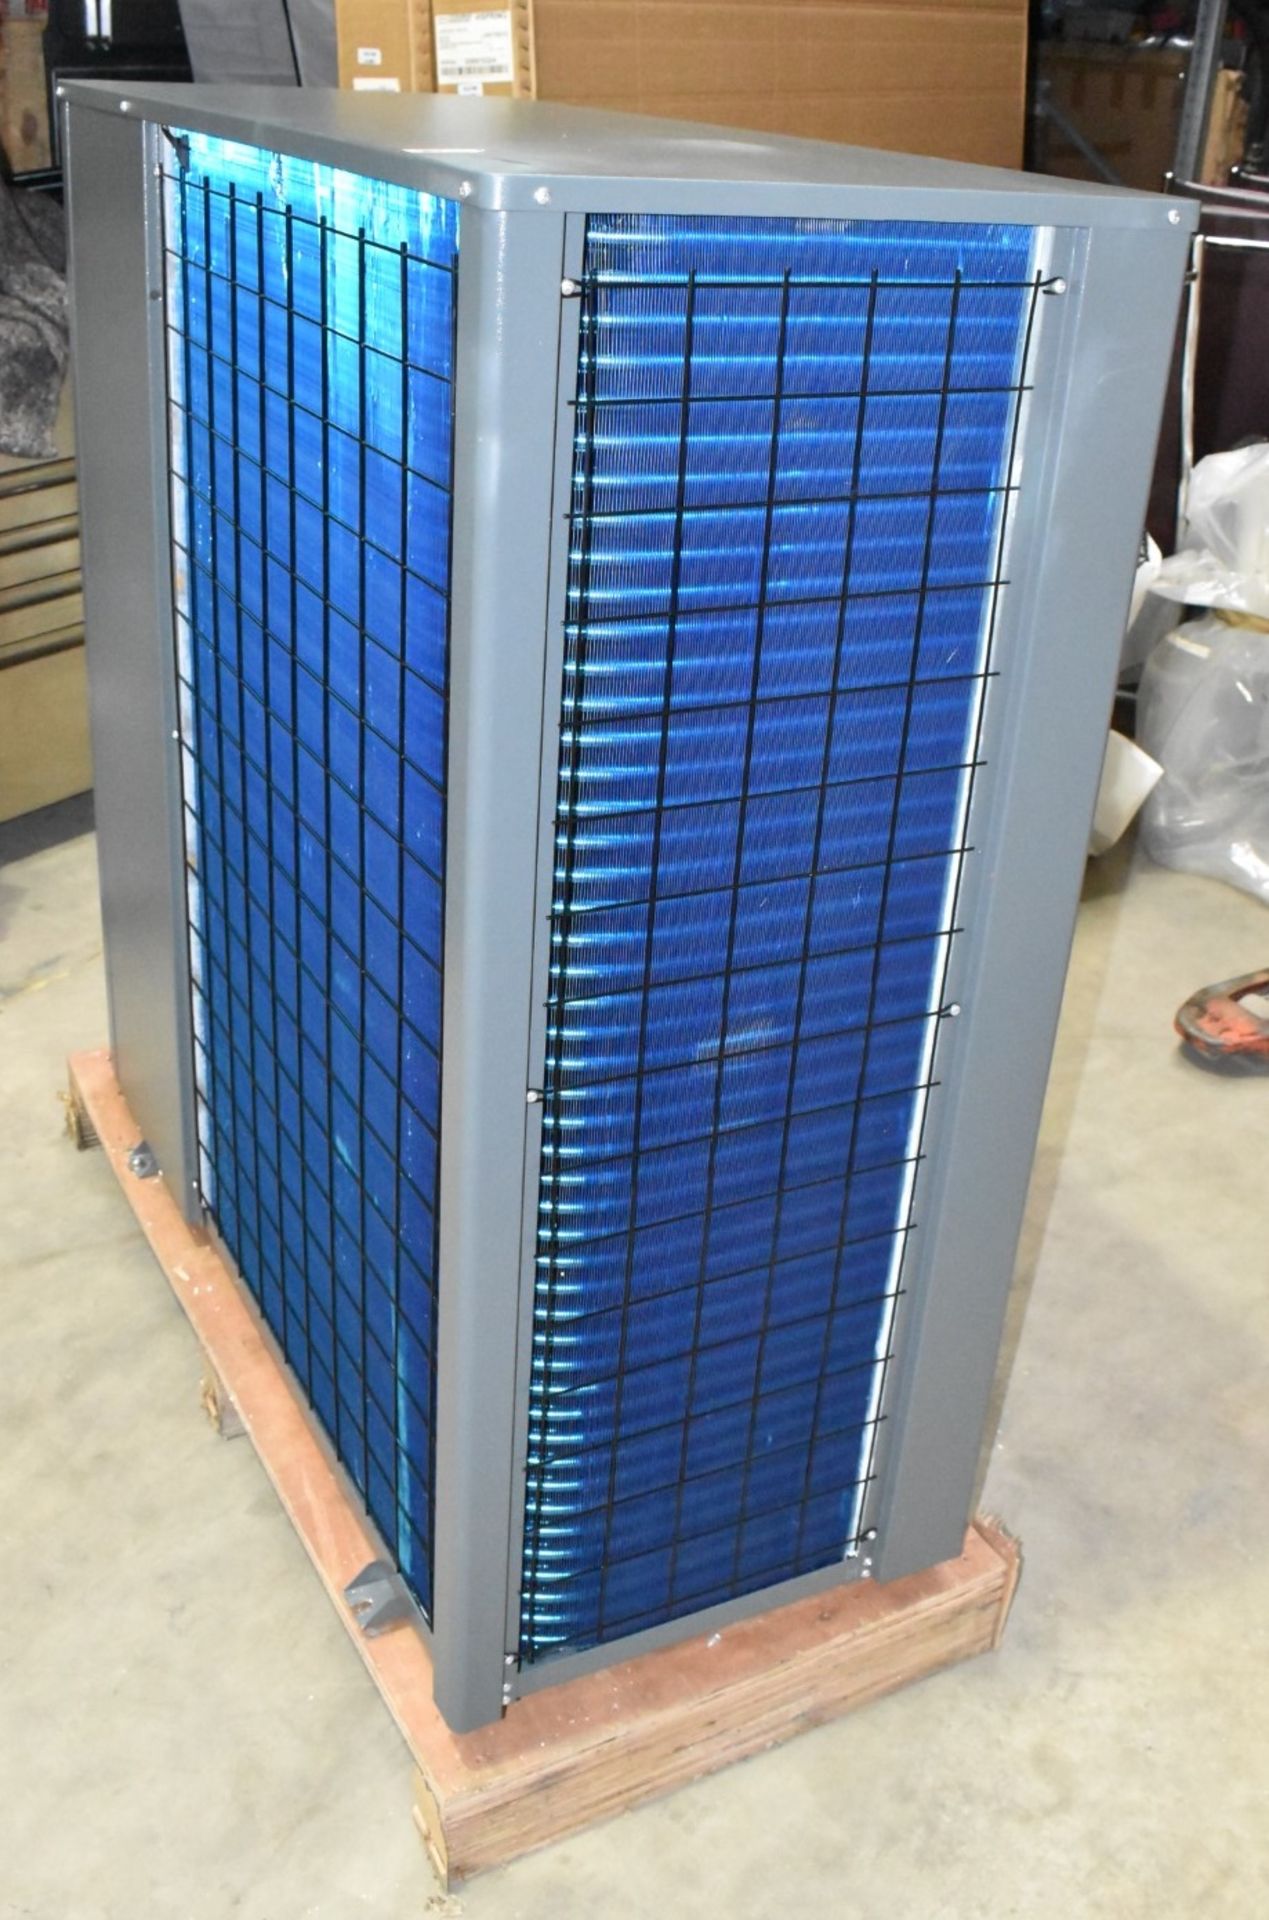 1 x REXMARTINS 'New-Energy 002' 22 kW Air Source Heat Pump (Model BKDX60-220) - New / Unused - Image 11 of 42